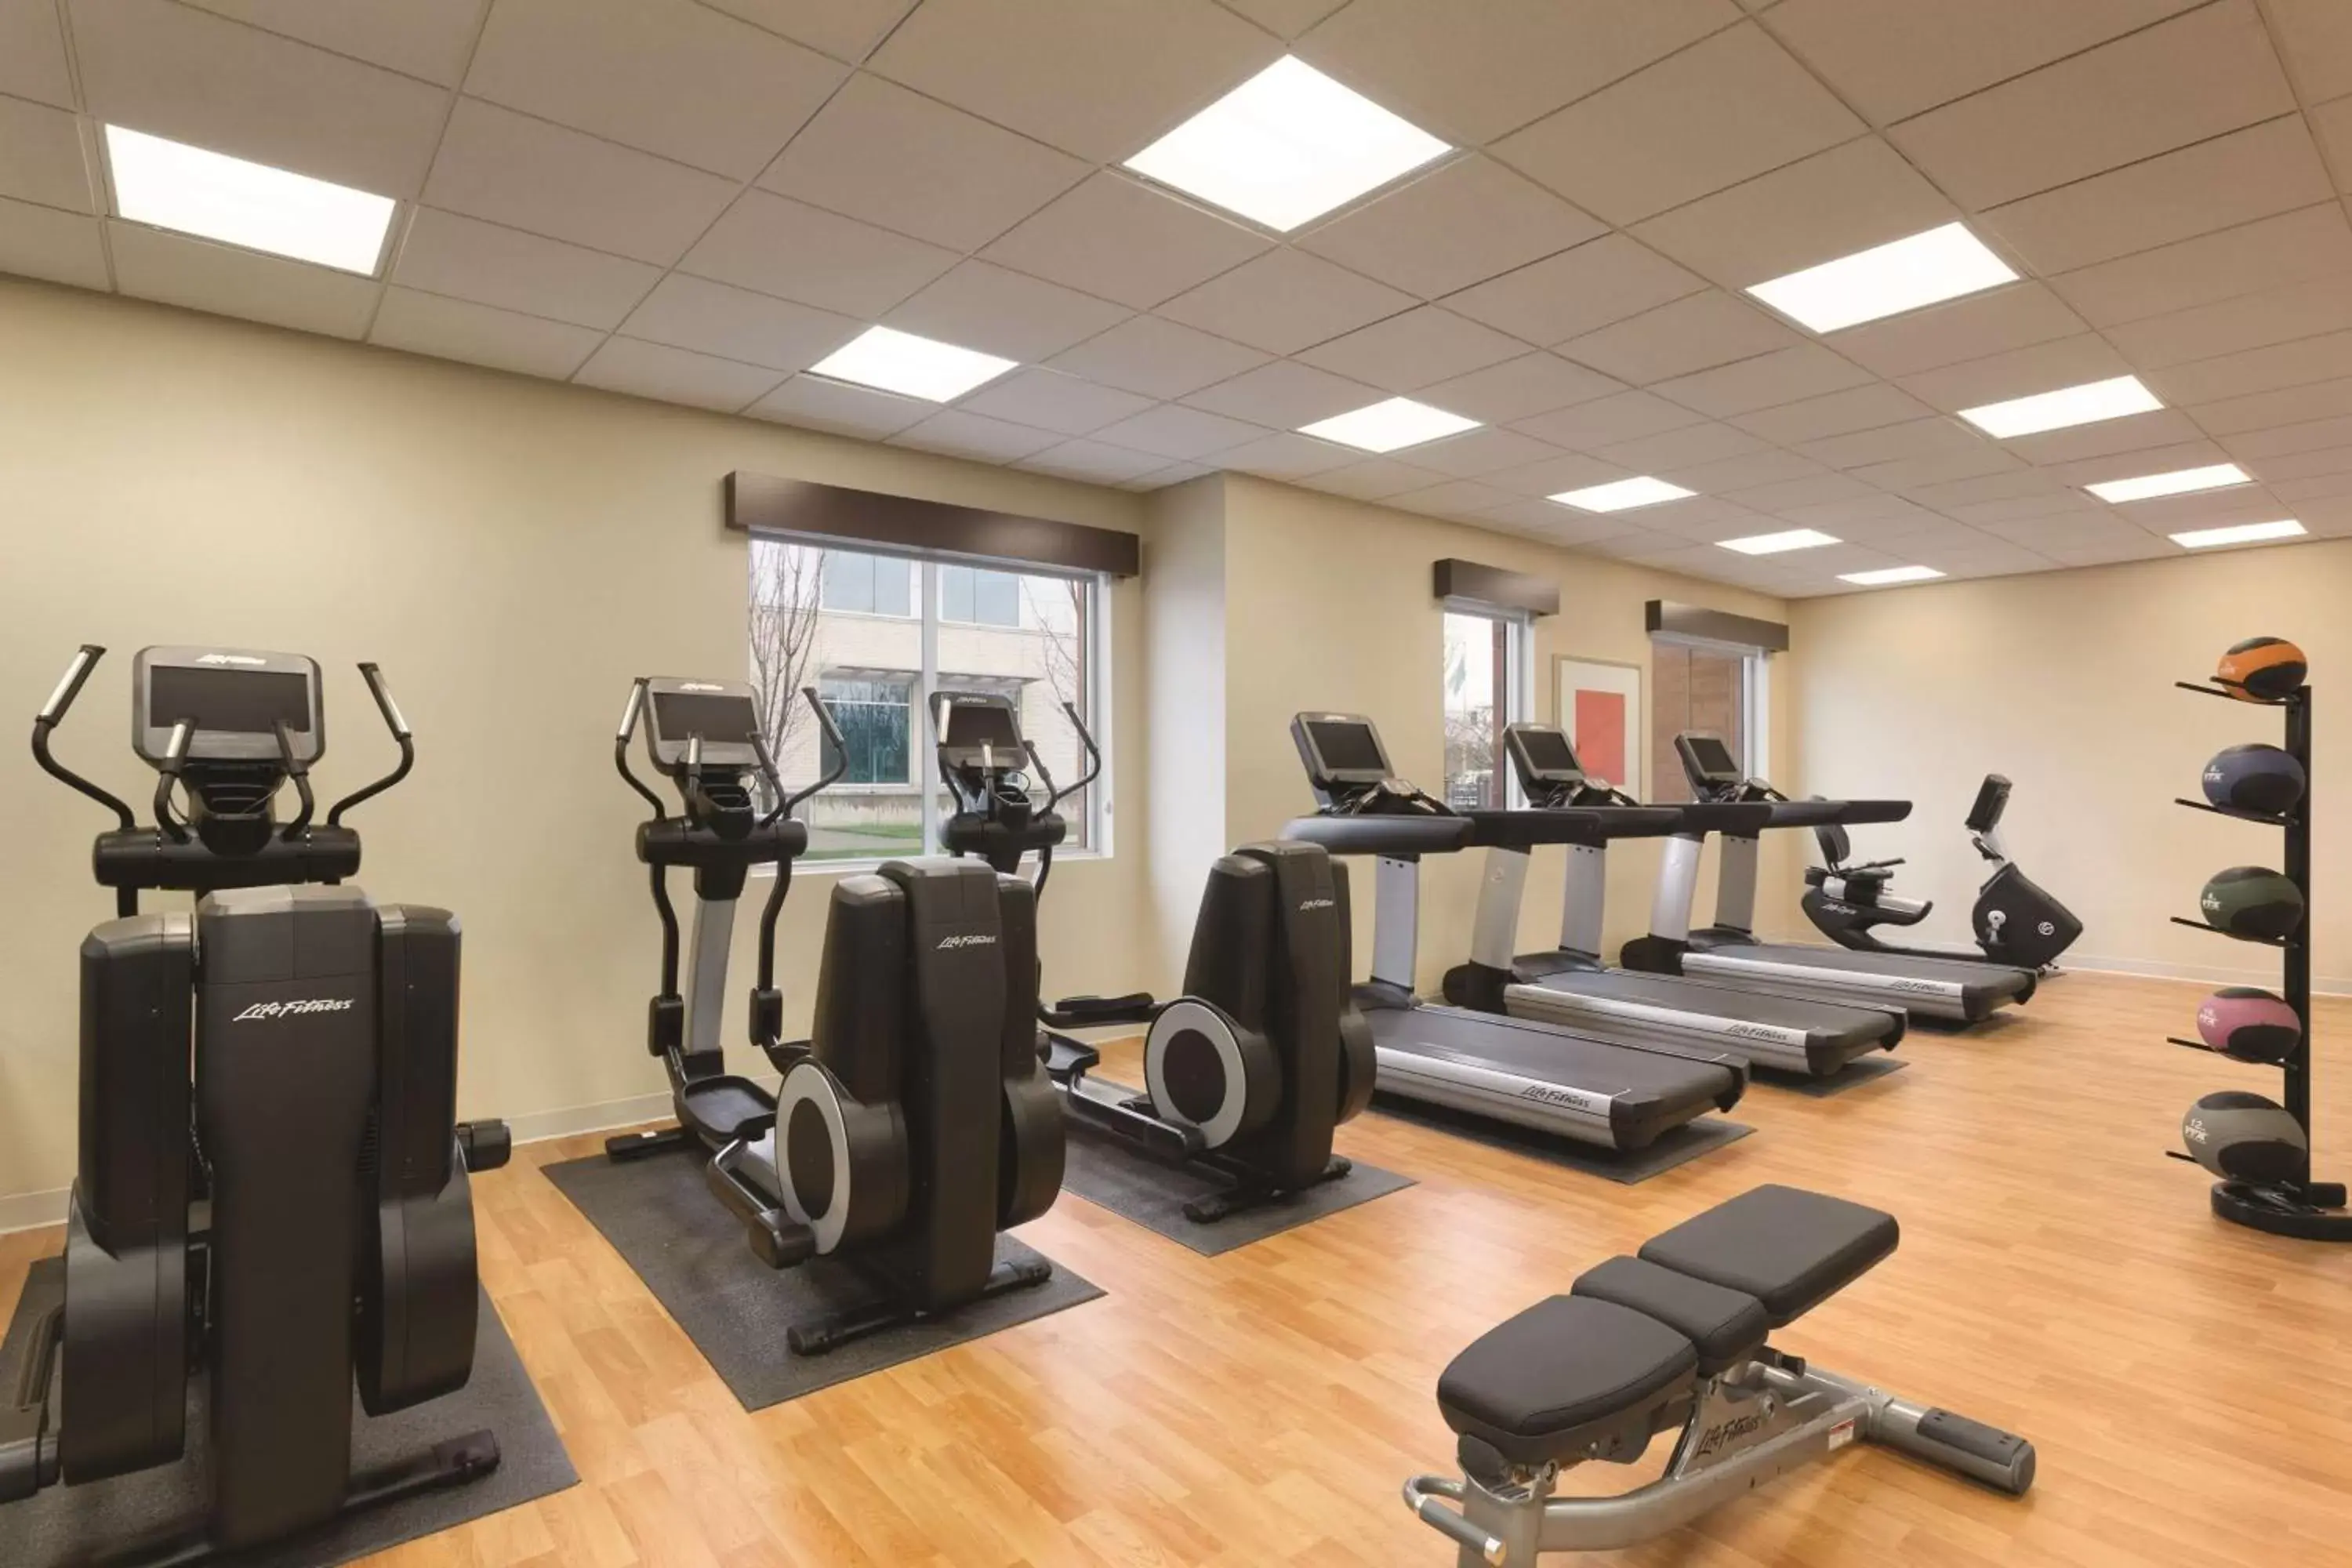 Fitness centre/facilities, Fitness Center/Facilities in Hyatt Place Portland Airport/Cascade Station